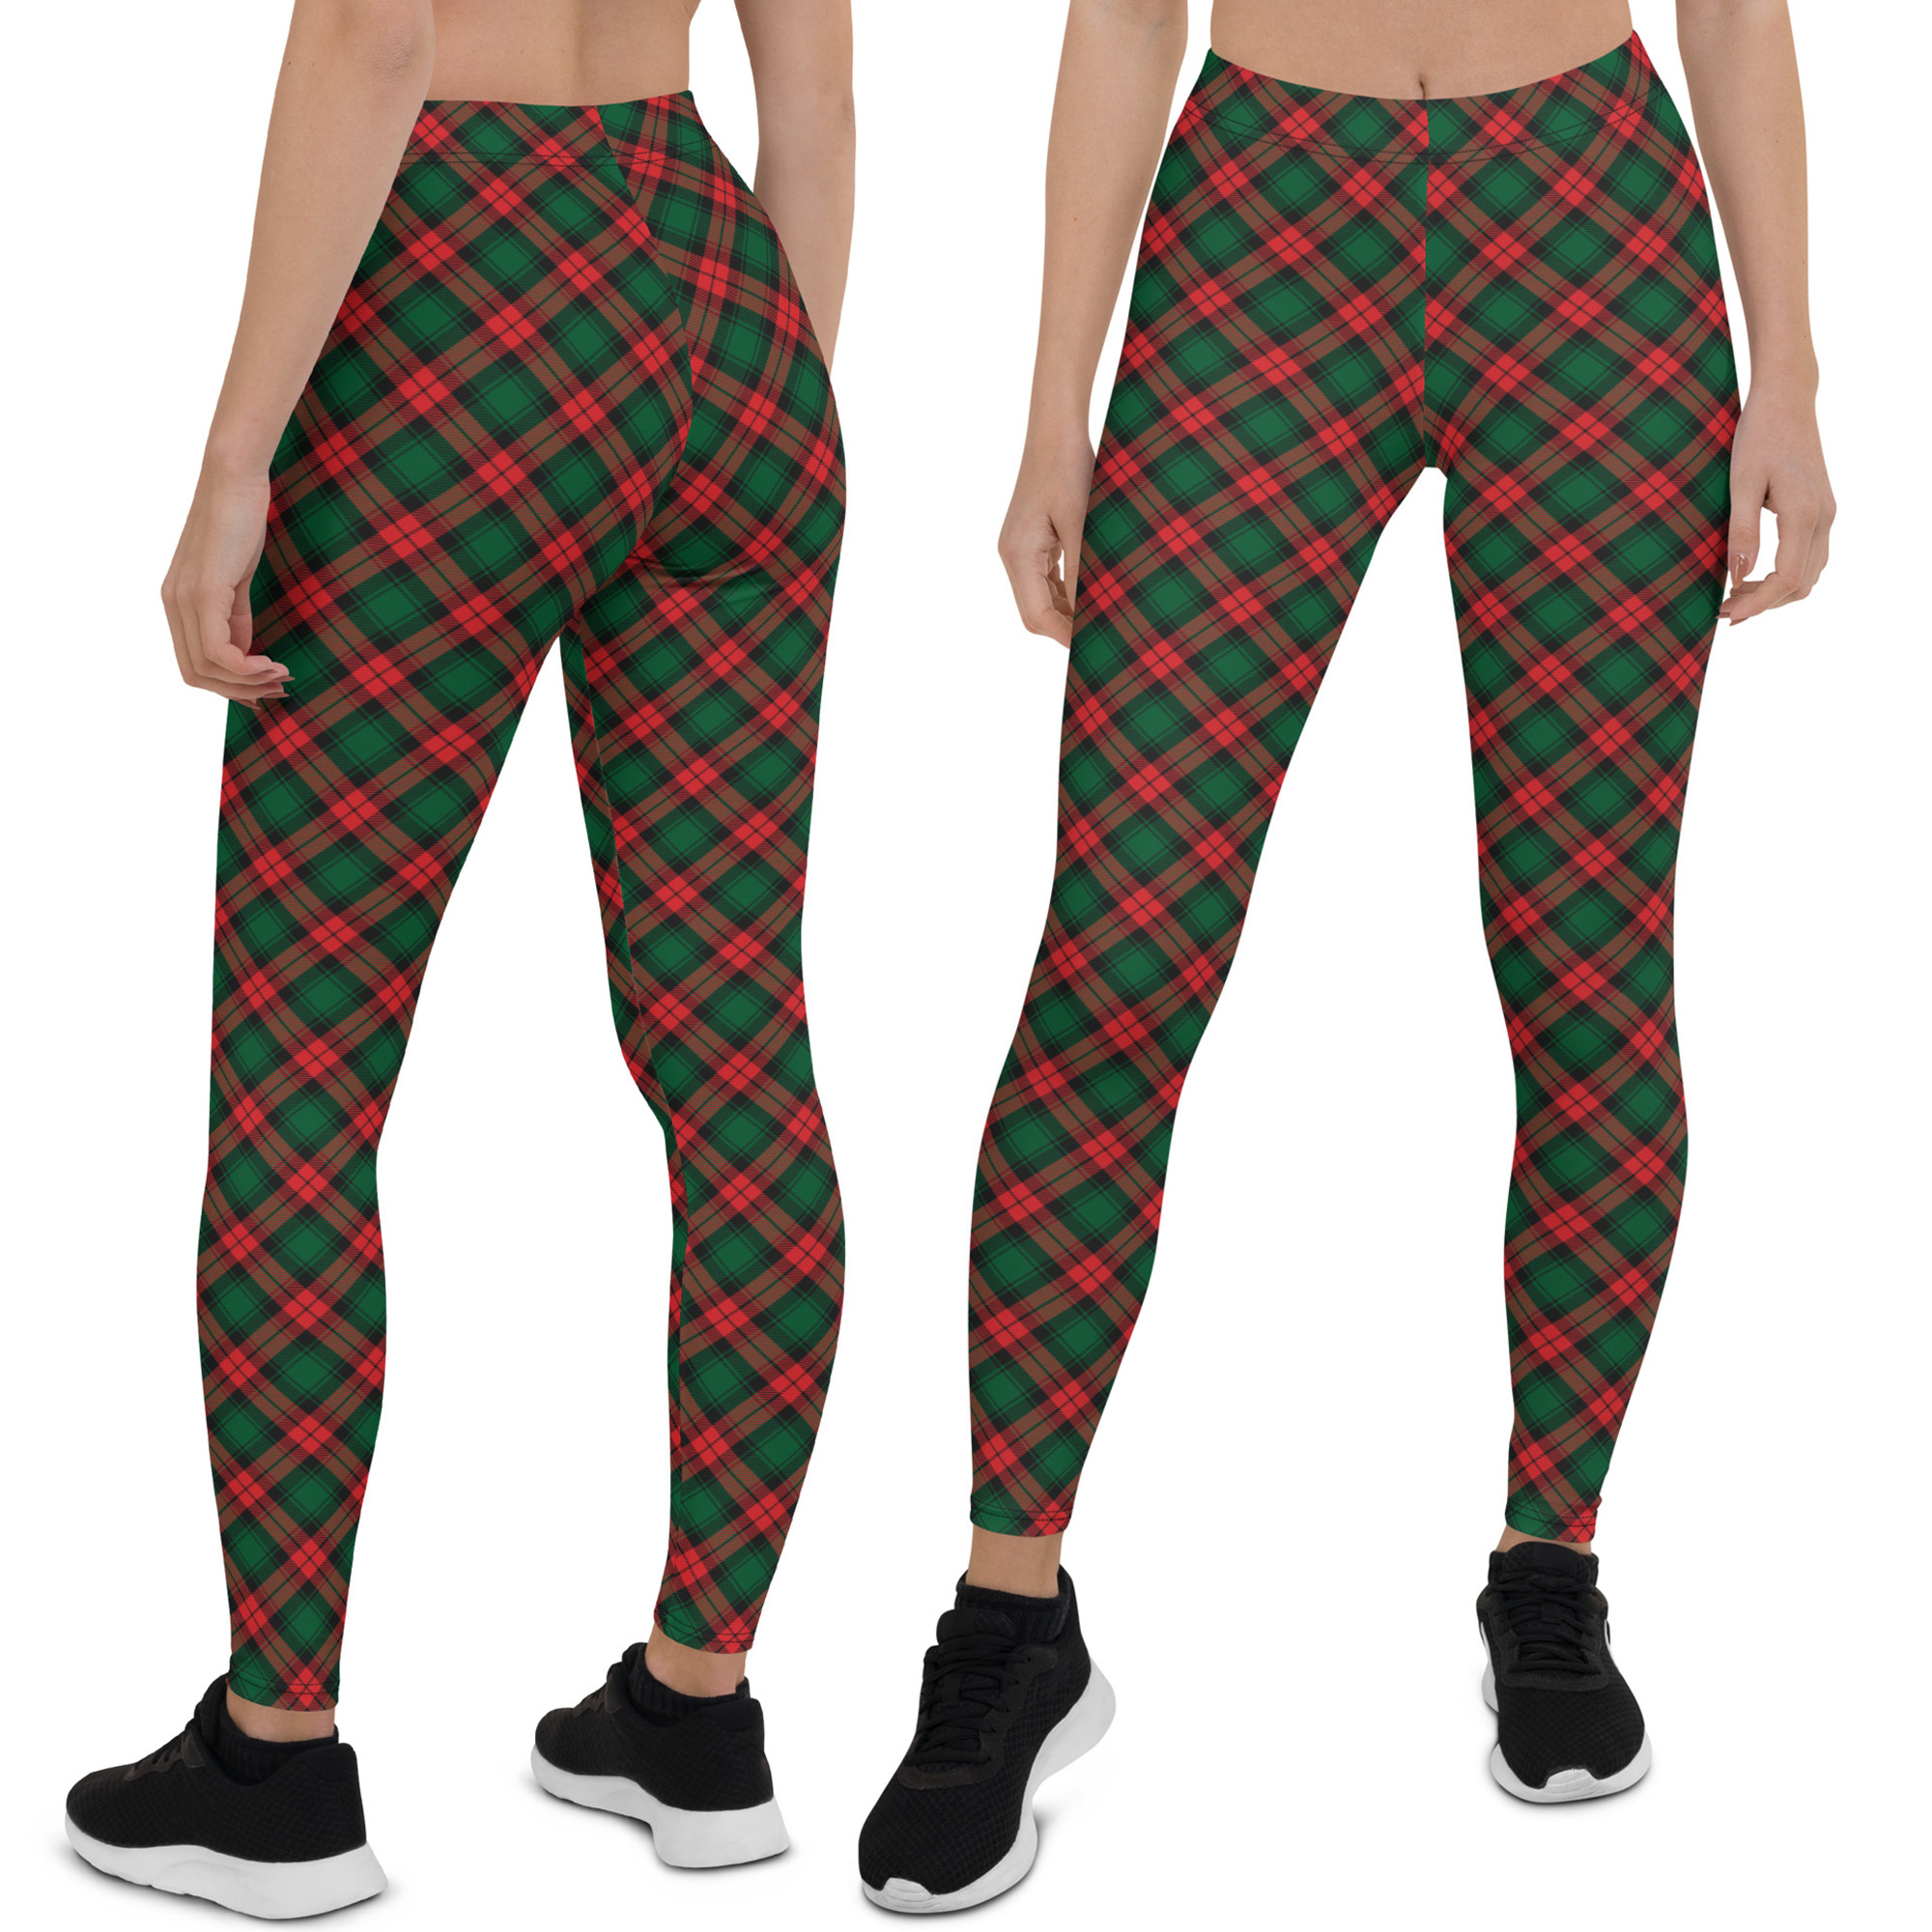 Tartan print Christmas Leggings, Red and Green Plaid Design legging